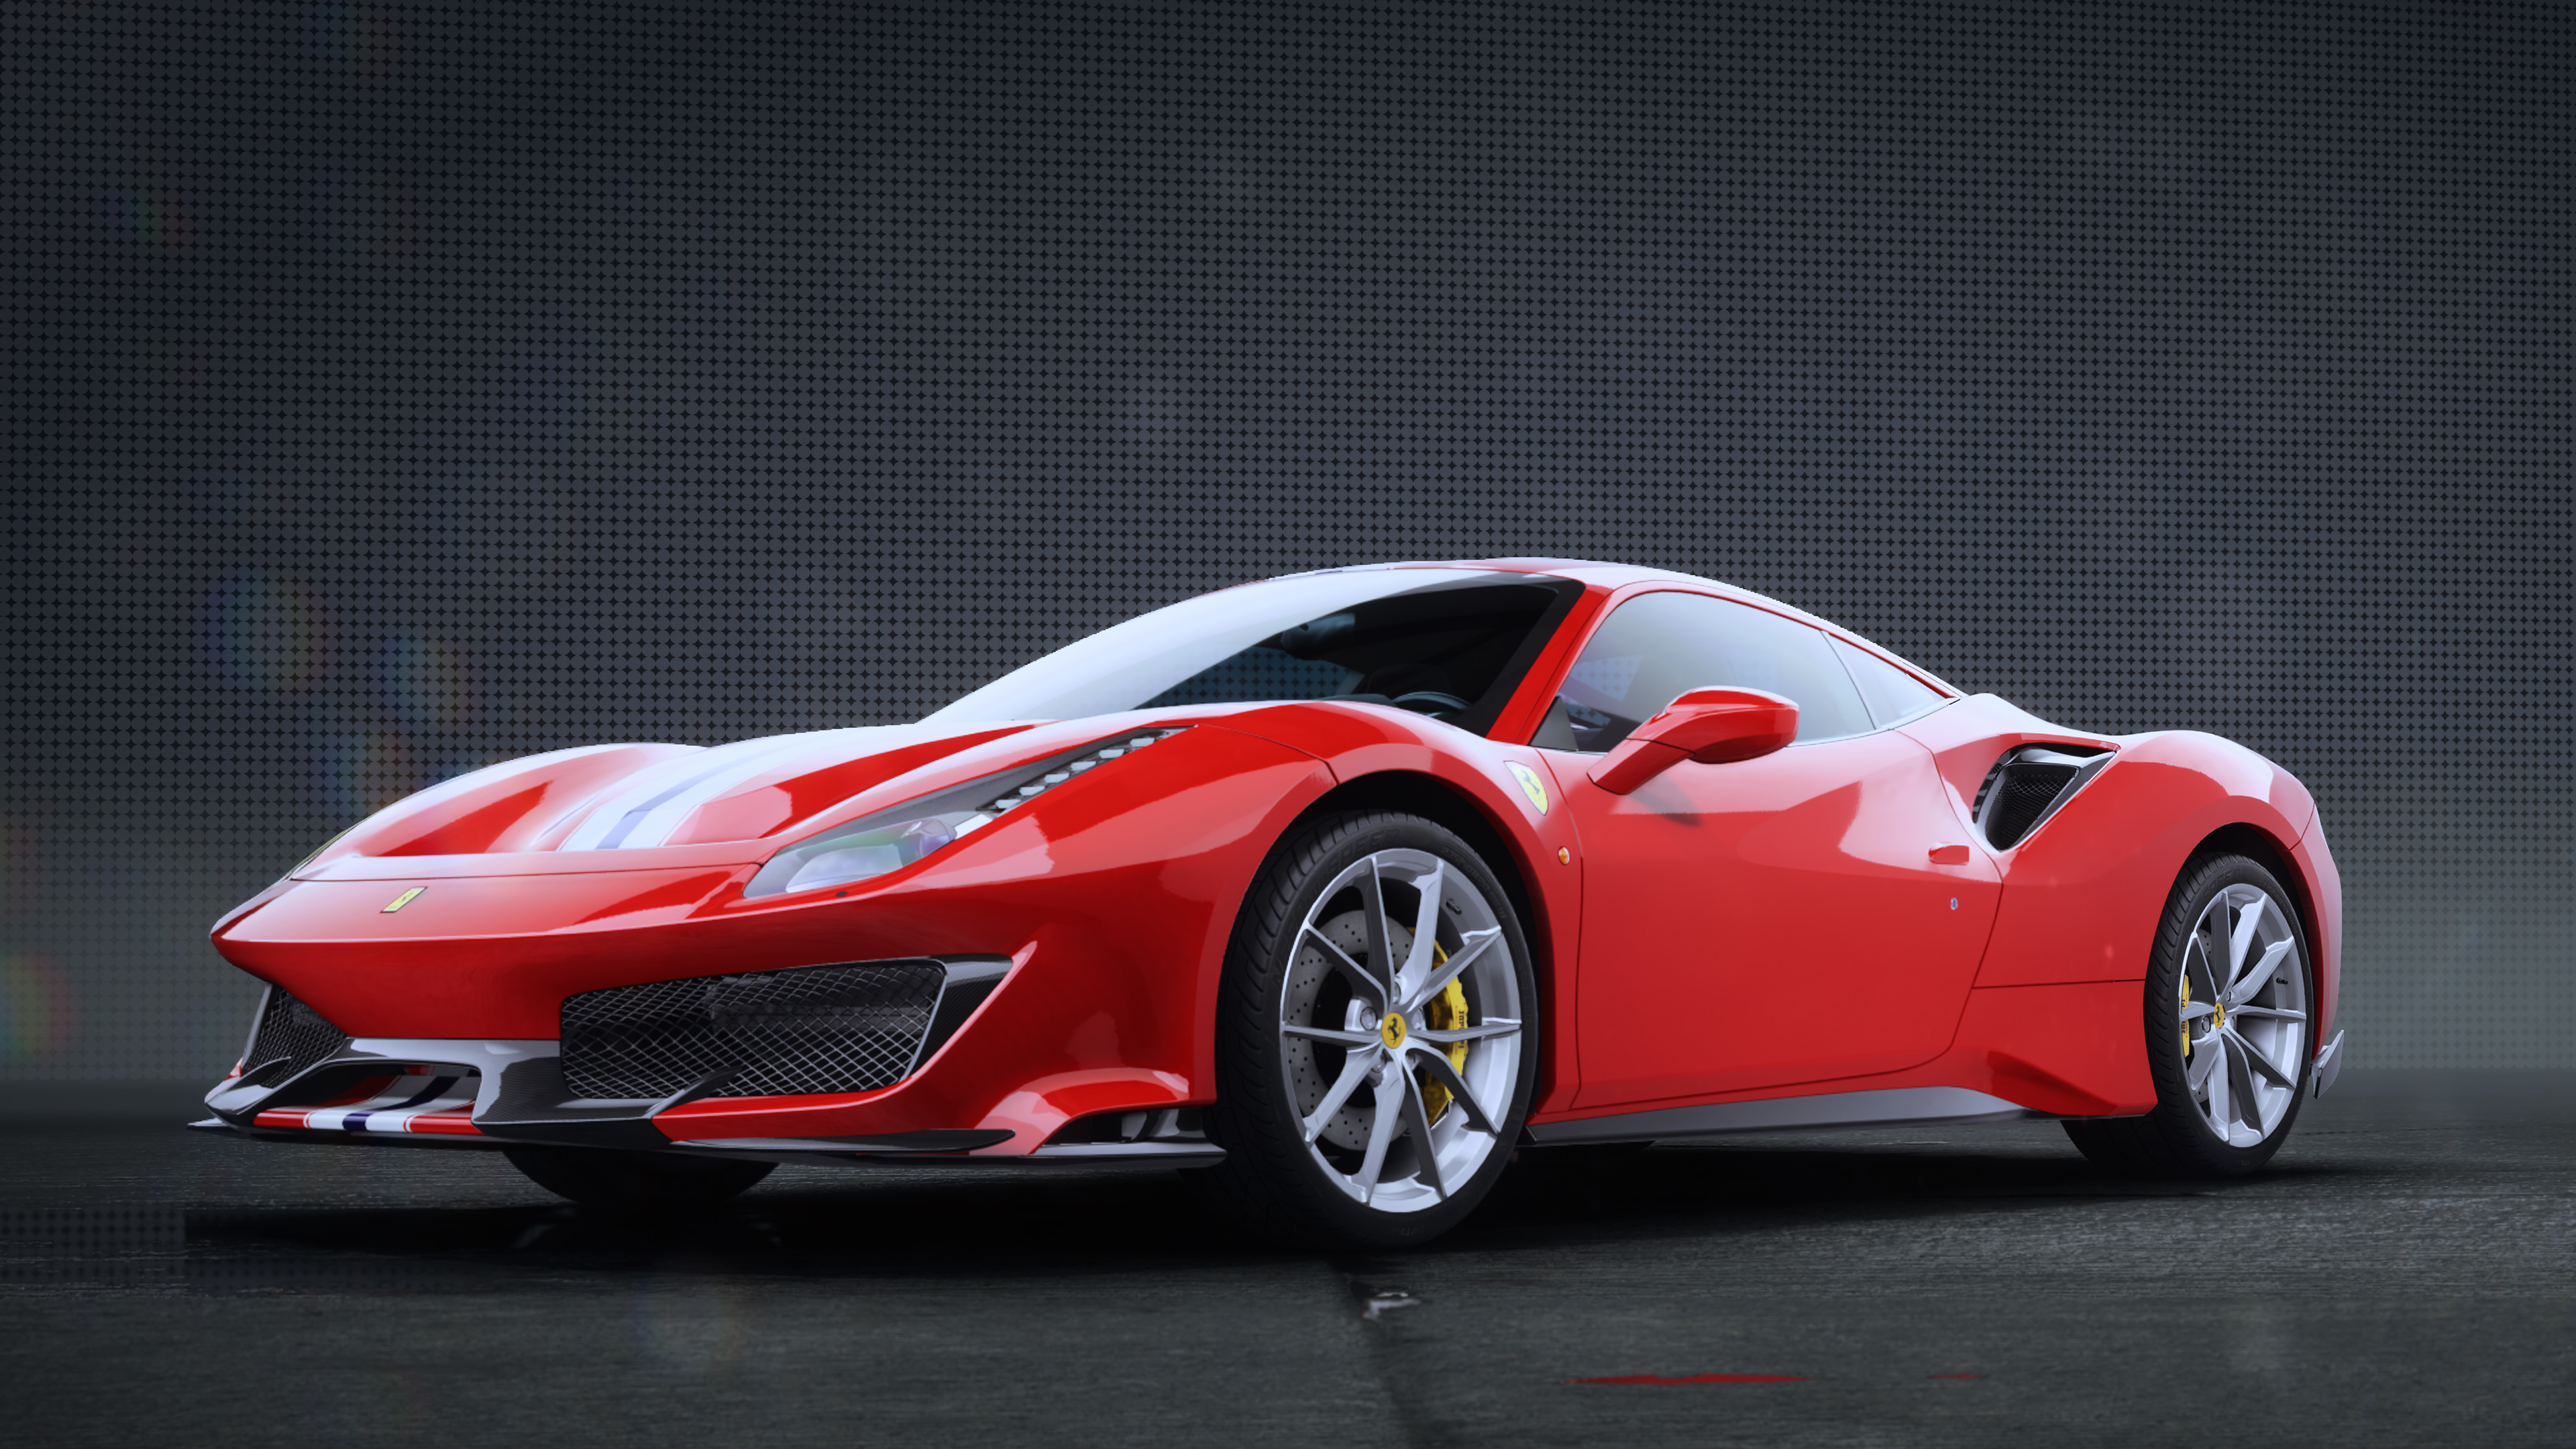 Ferrari F12berlinetta, Need for Speed Wiki